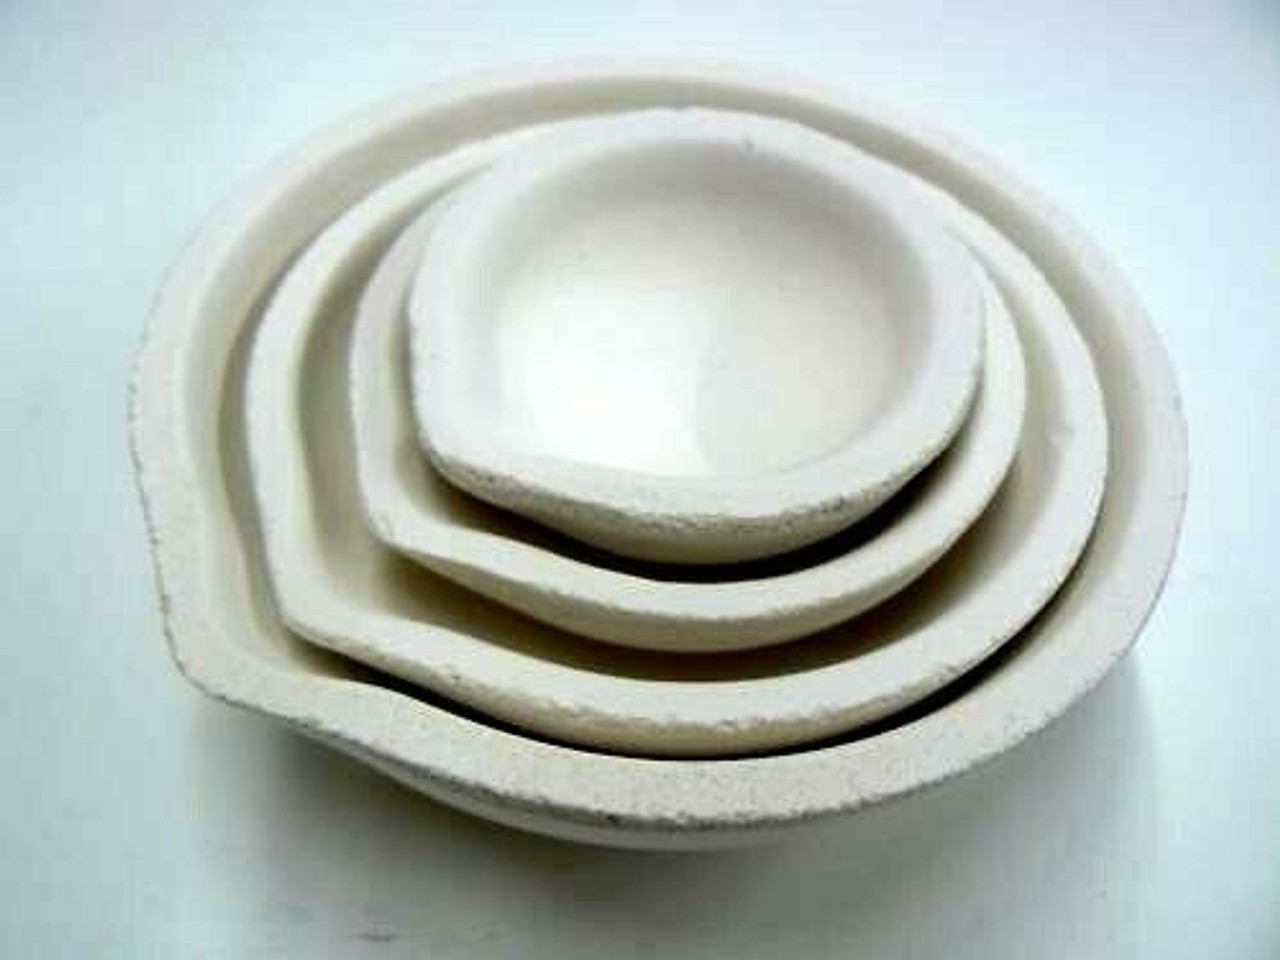 Melting and Casting Ceramic Crucible Dish 155 Gram Capacity Made in Italy